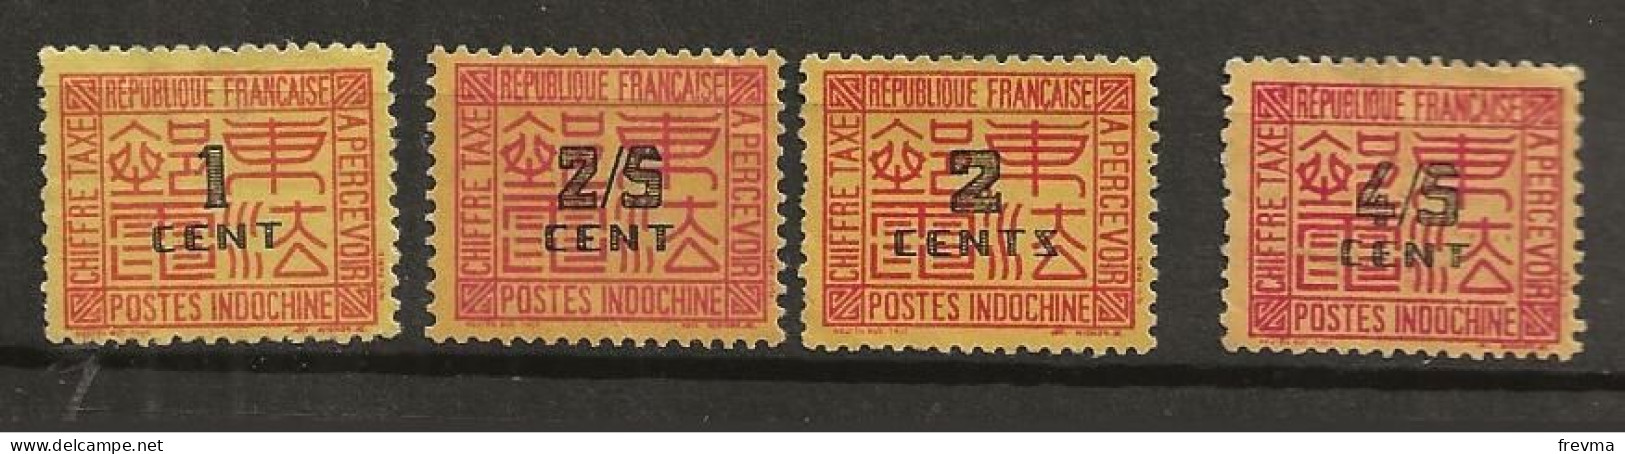 Timbre Poste Indochine Taxe Republique Francaise 1931-1941 - Segnatasse